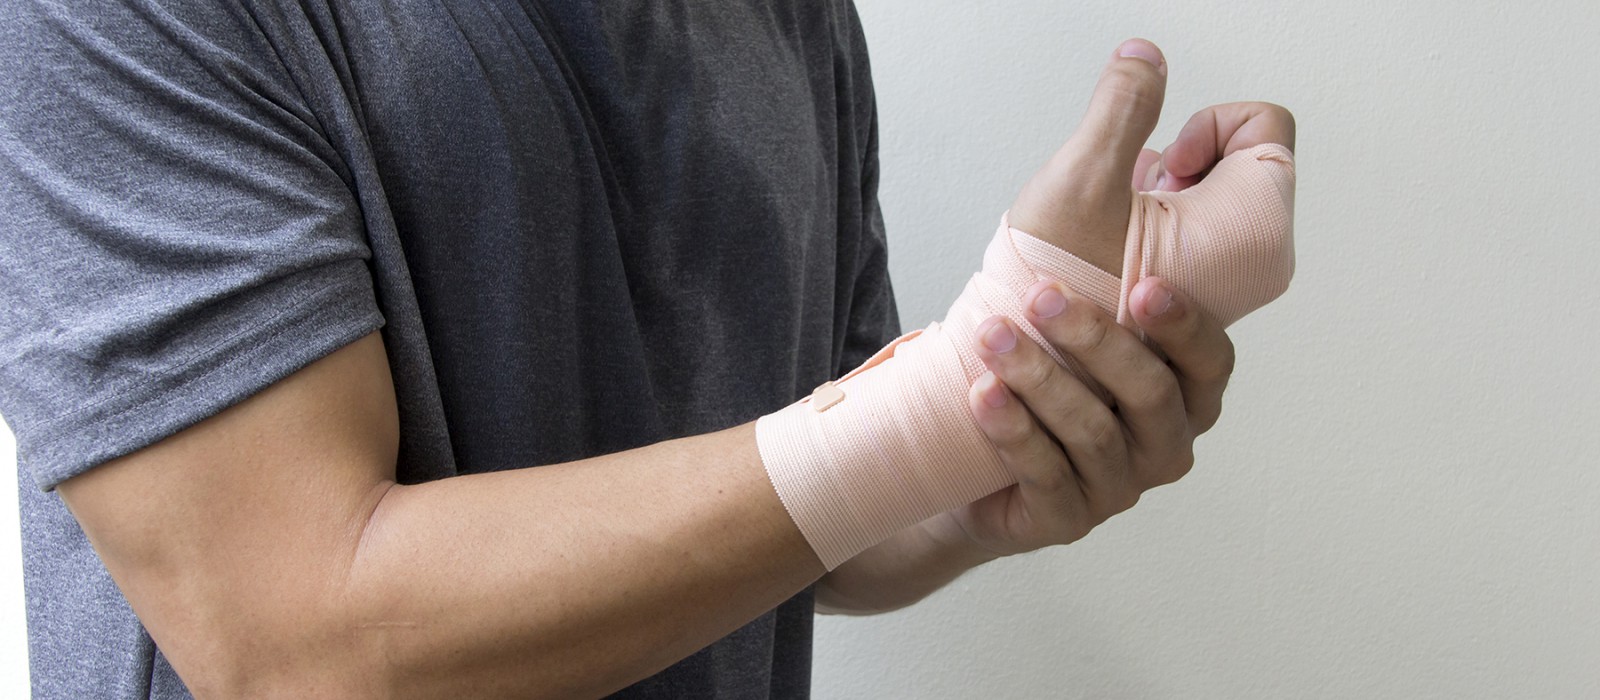 Hand and Wrist Pain/Injuries